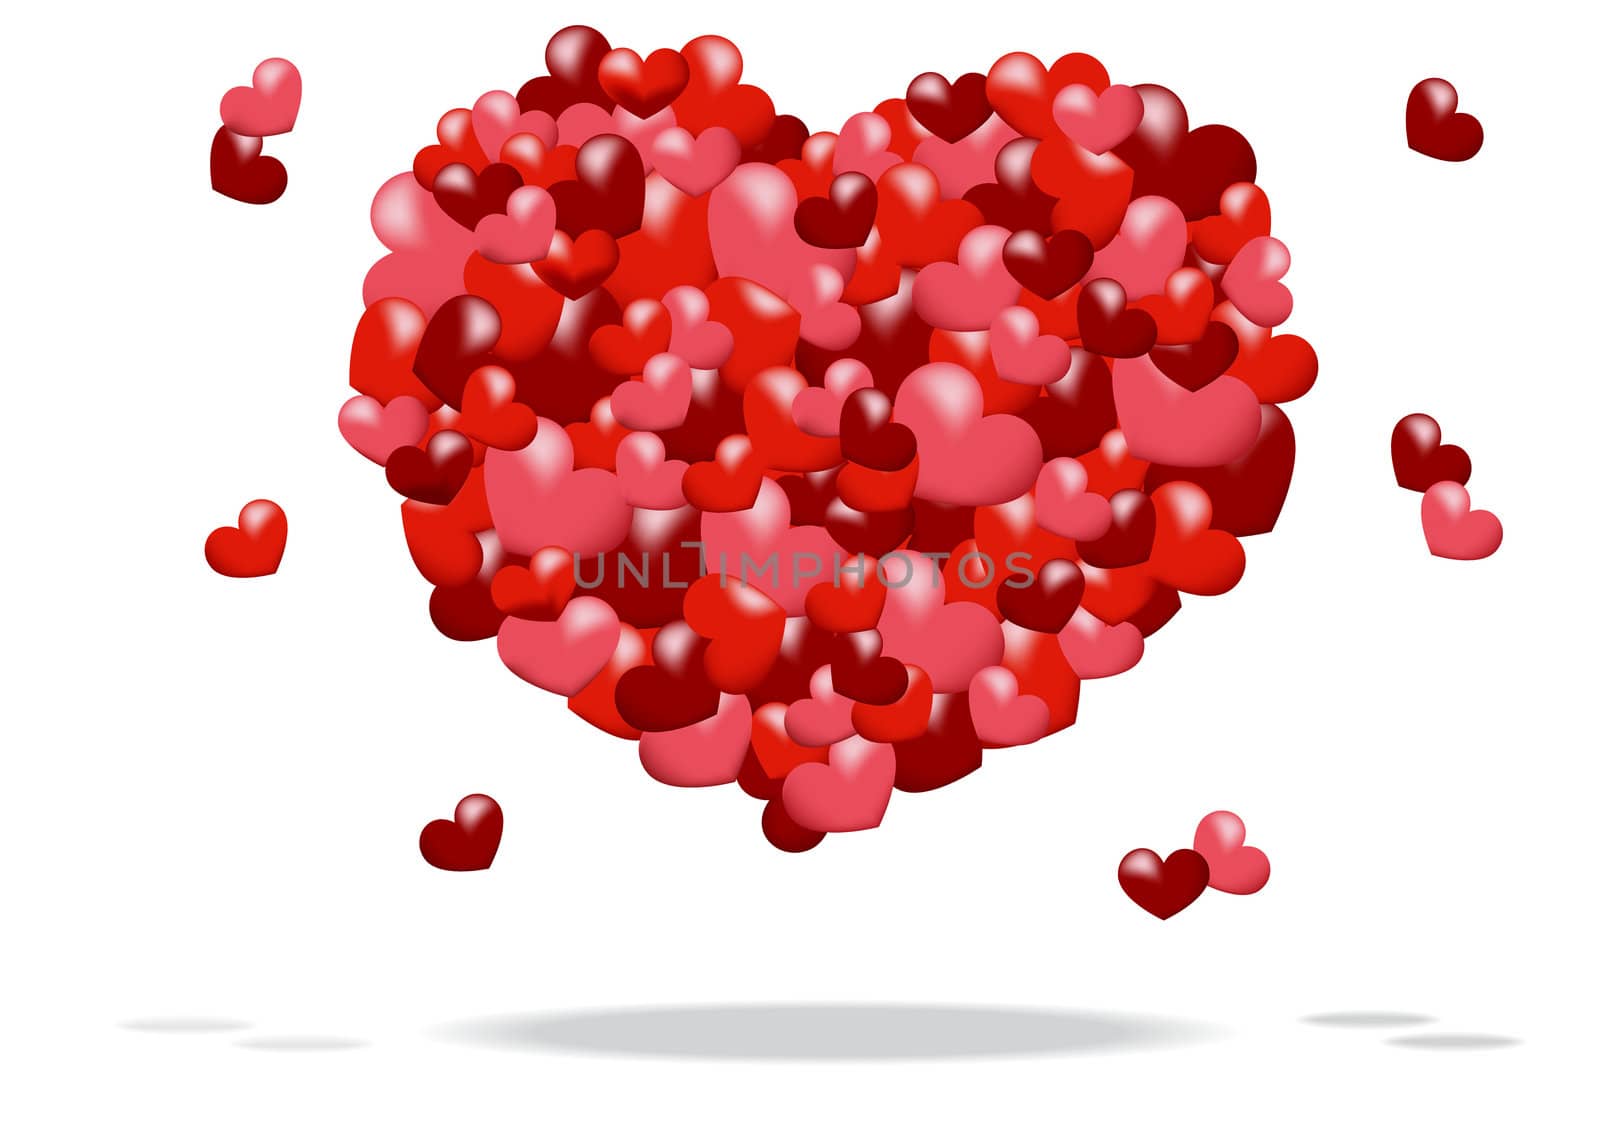 heart of hearts by rodakm